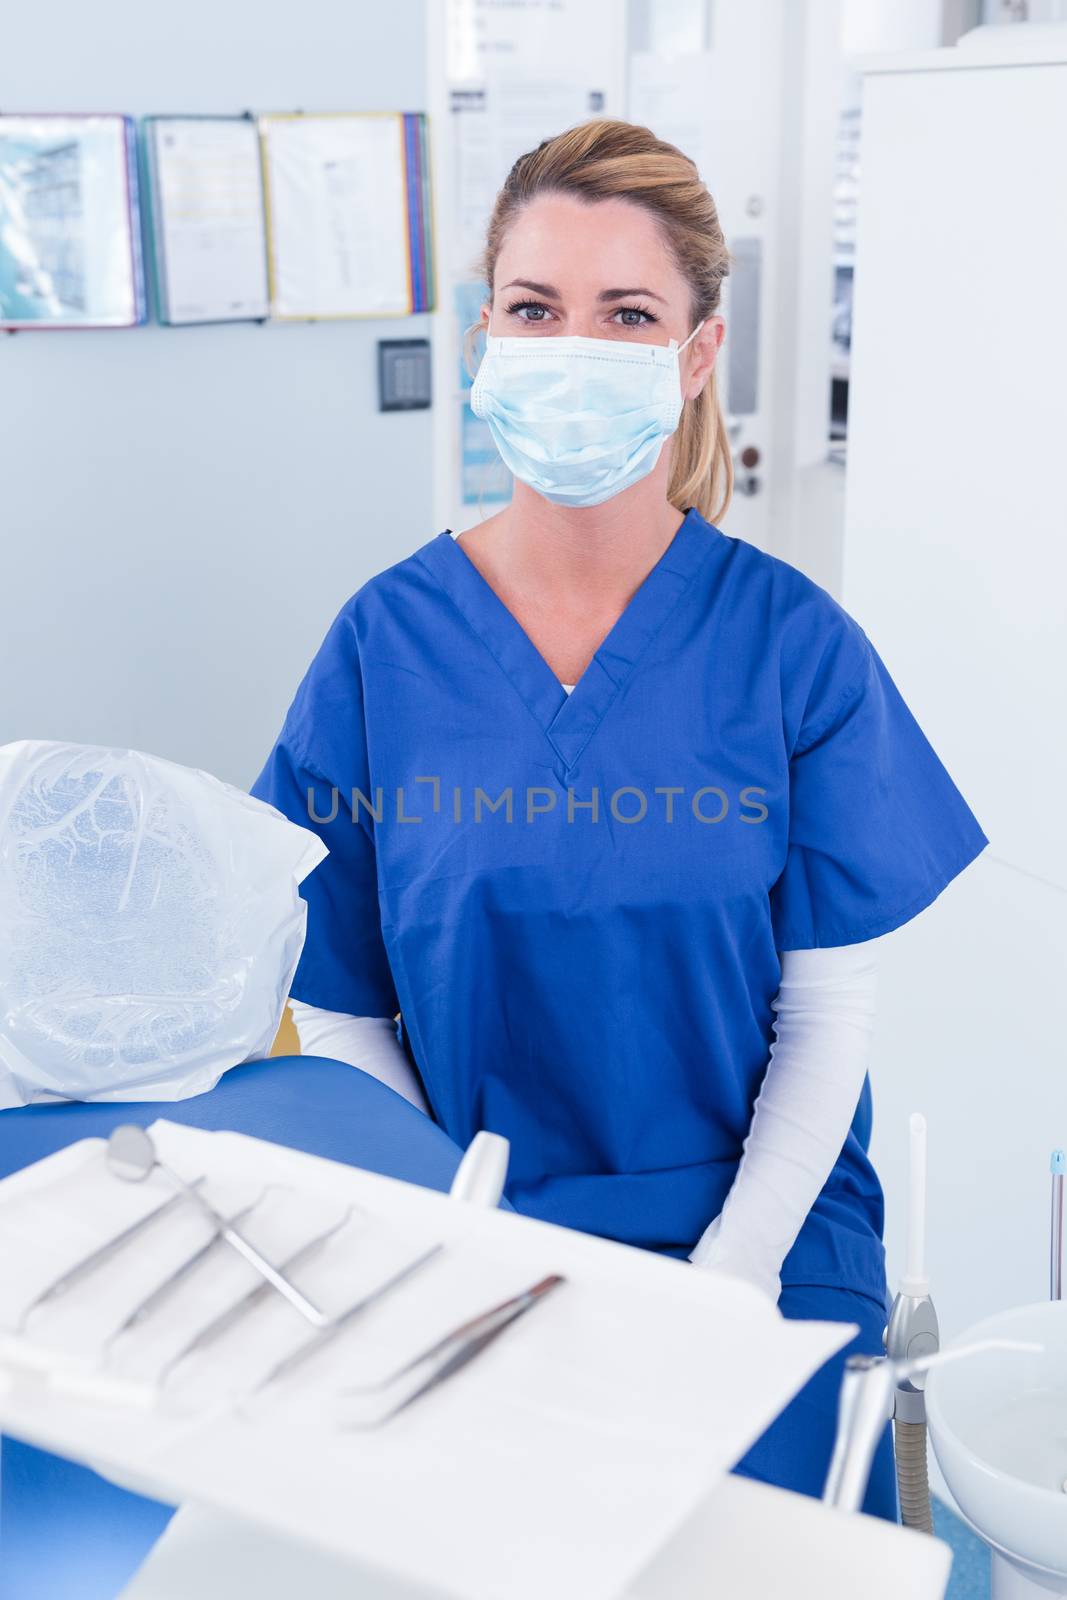 Dentist in mask behind tray of tools by Wavebreakmedia